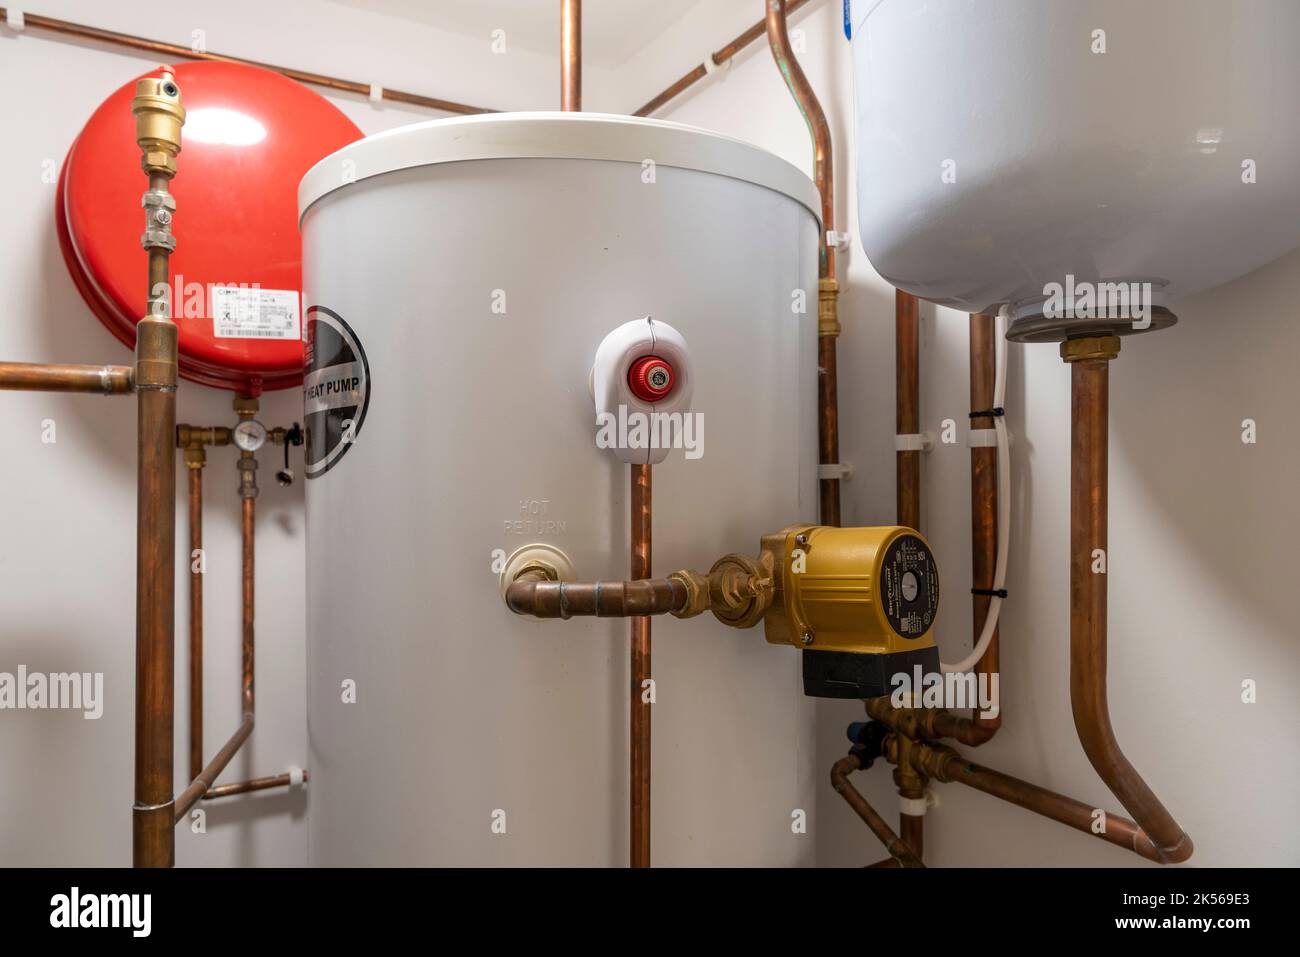 air-source-heat-pump-hot-water-tank-stock-photo-alamy